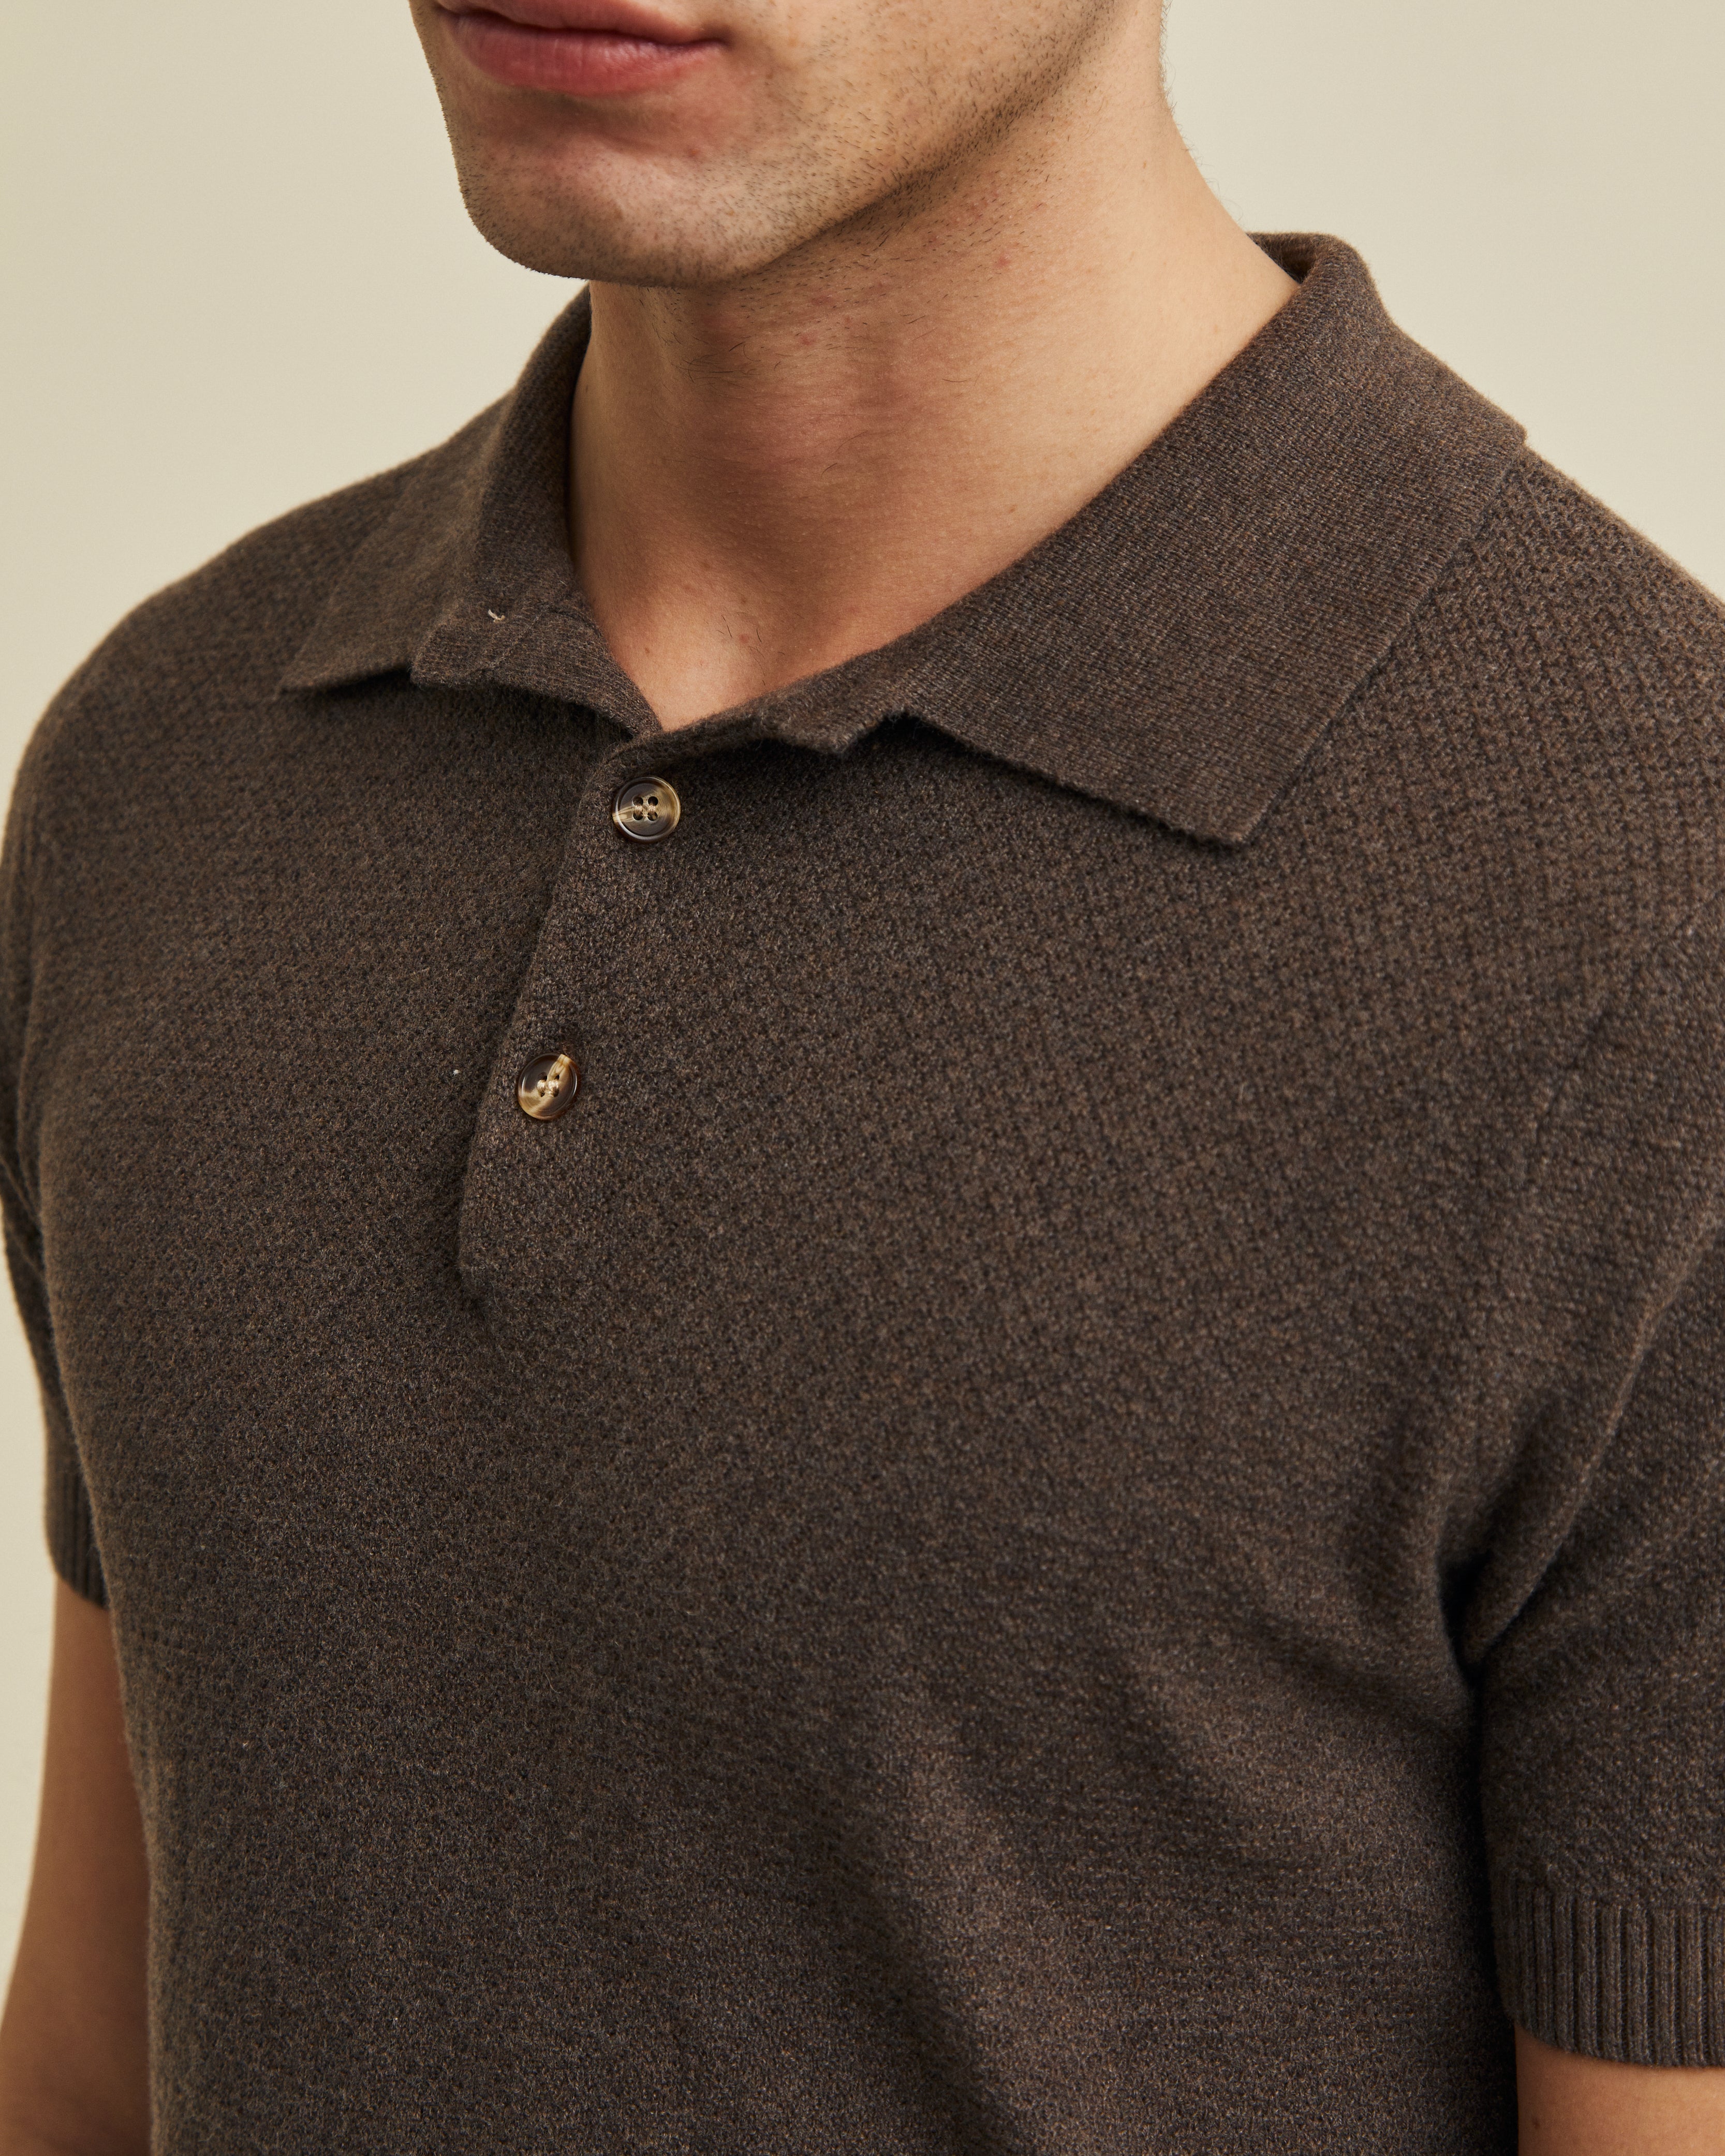 brown knit polo shirt